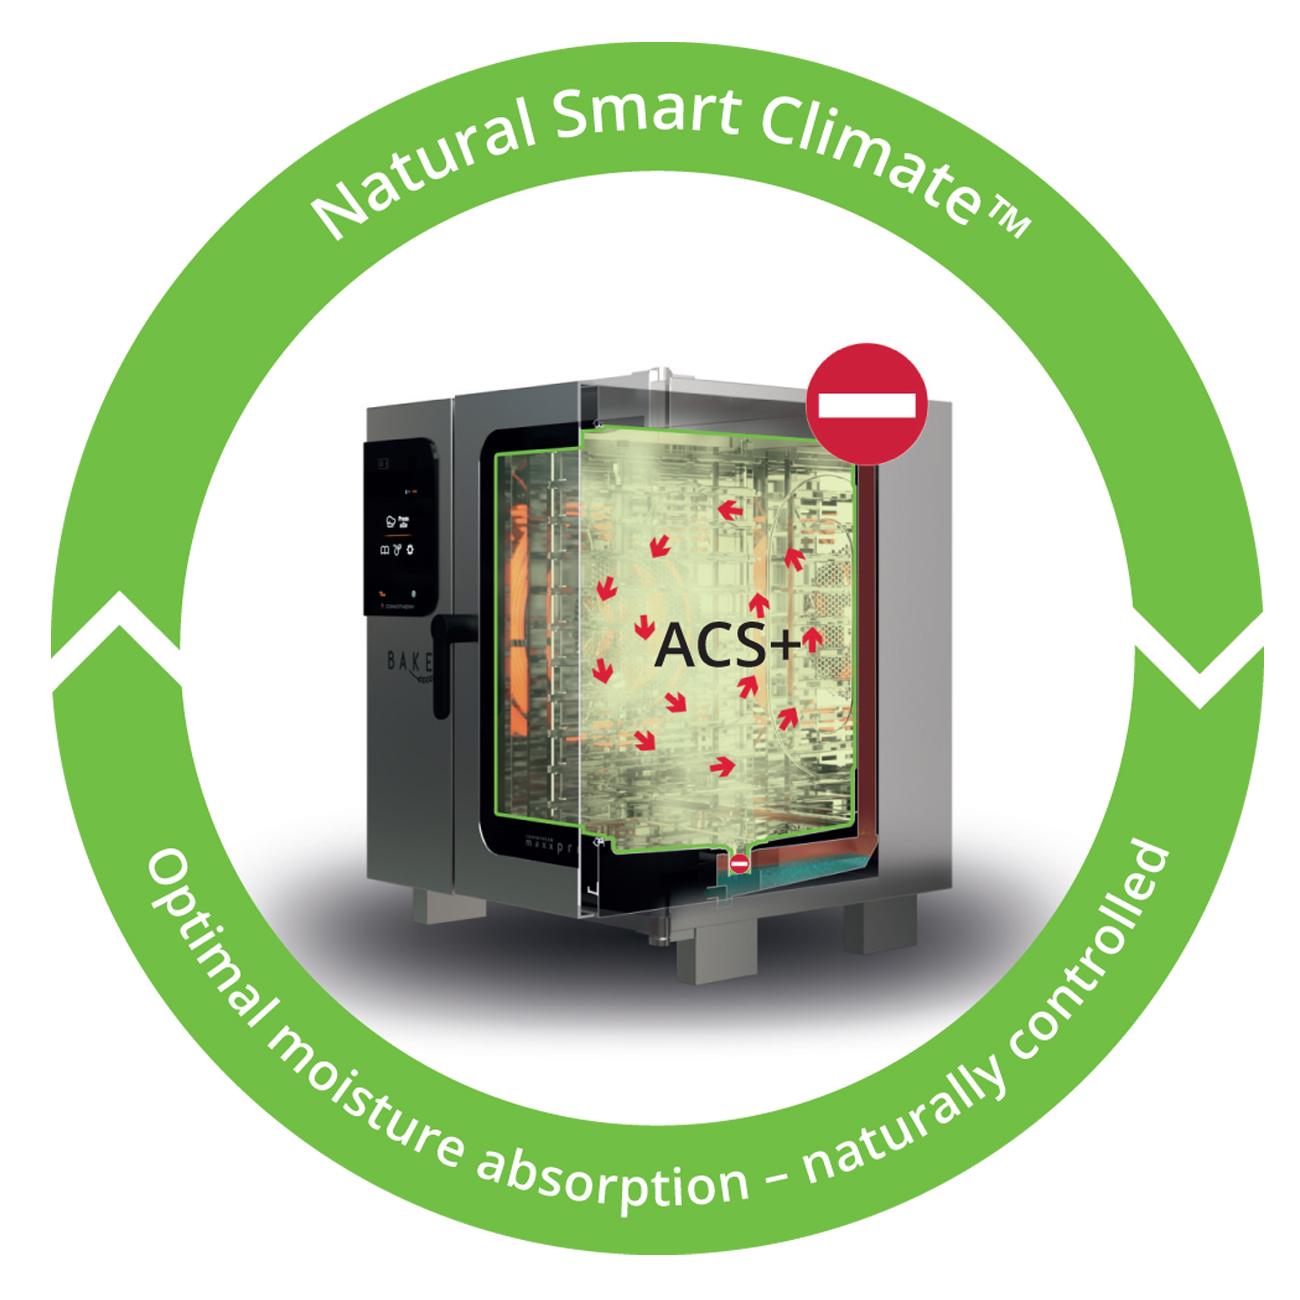 natural smart climate (acs+)